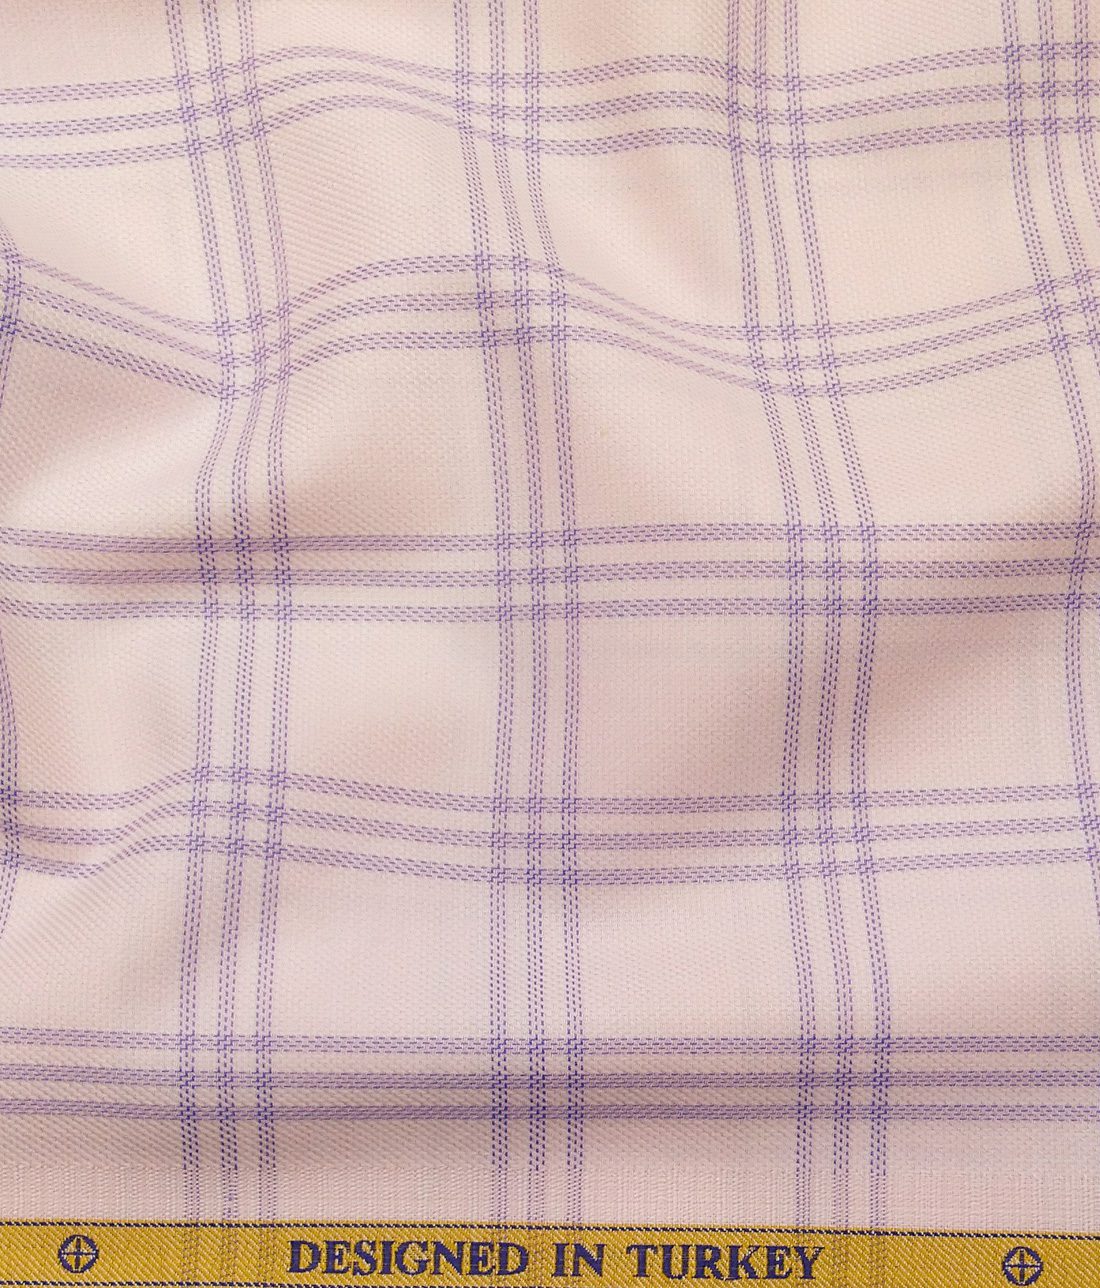 Soktas Men's 100% Egyptian Giza Cotton Purple Broad Checks Unstitched Shirt Fabric (Light Pink